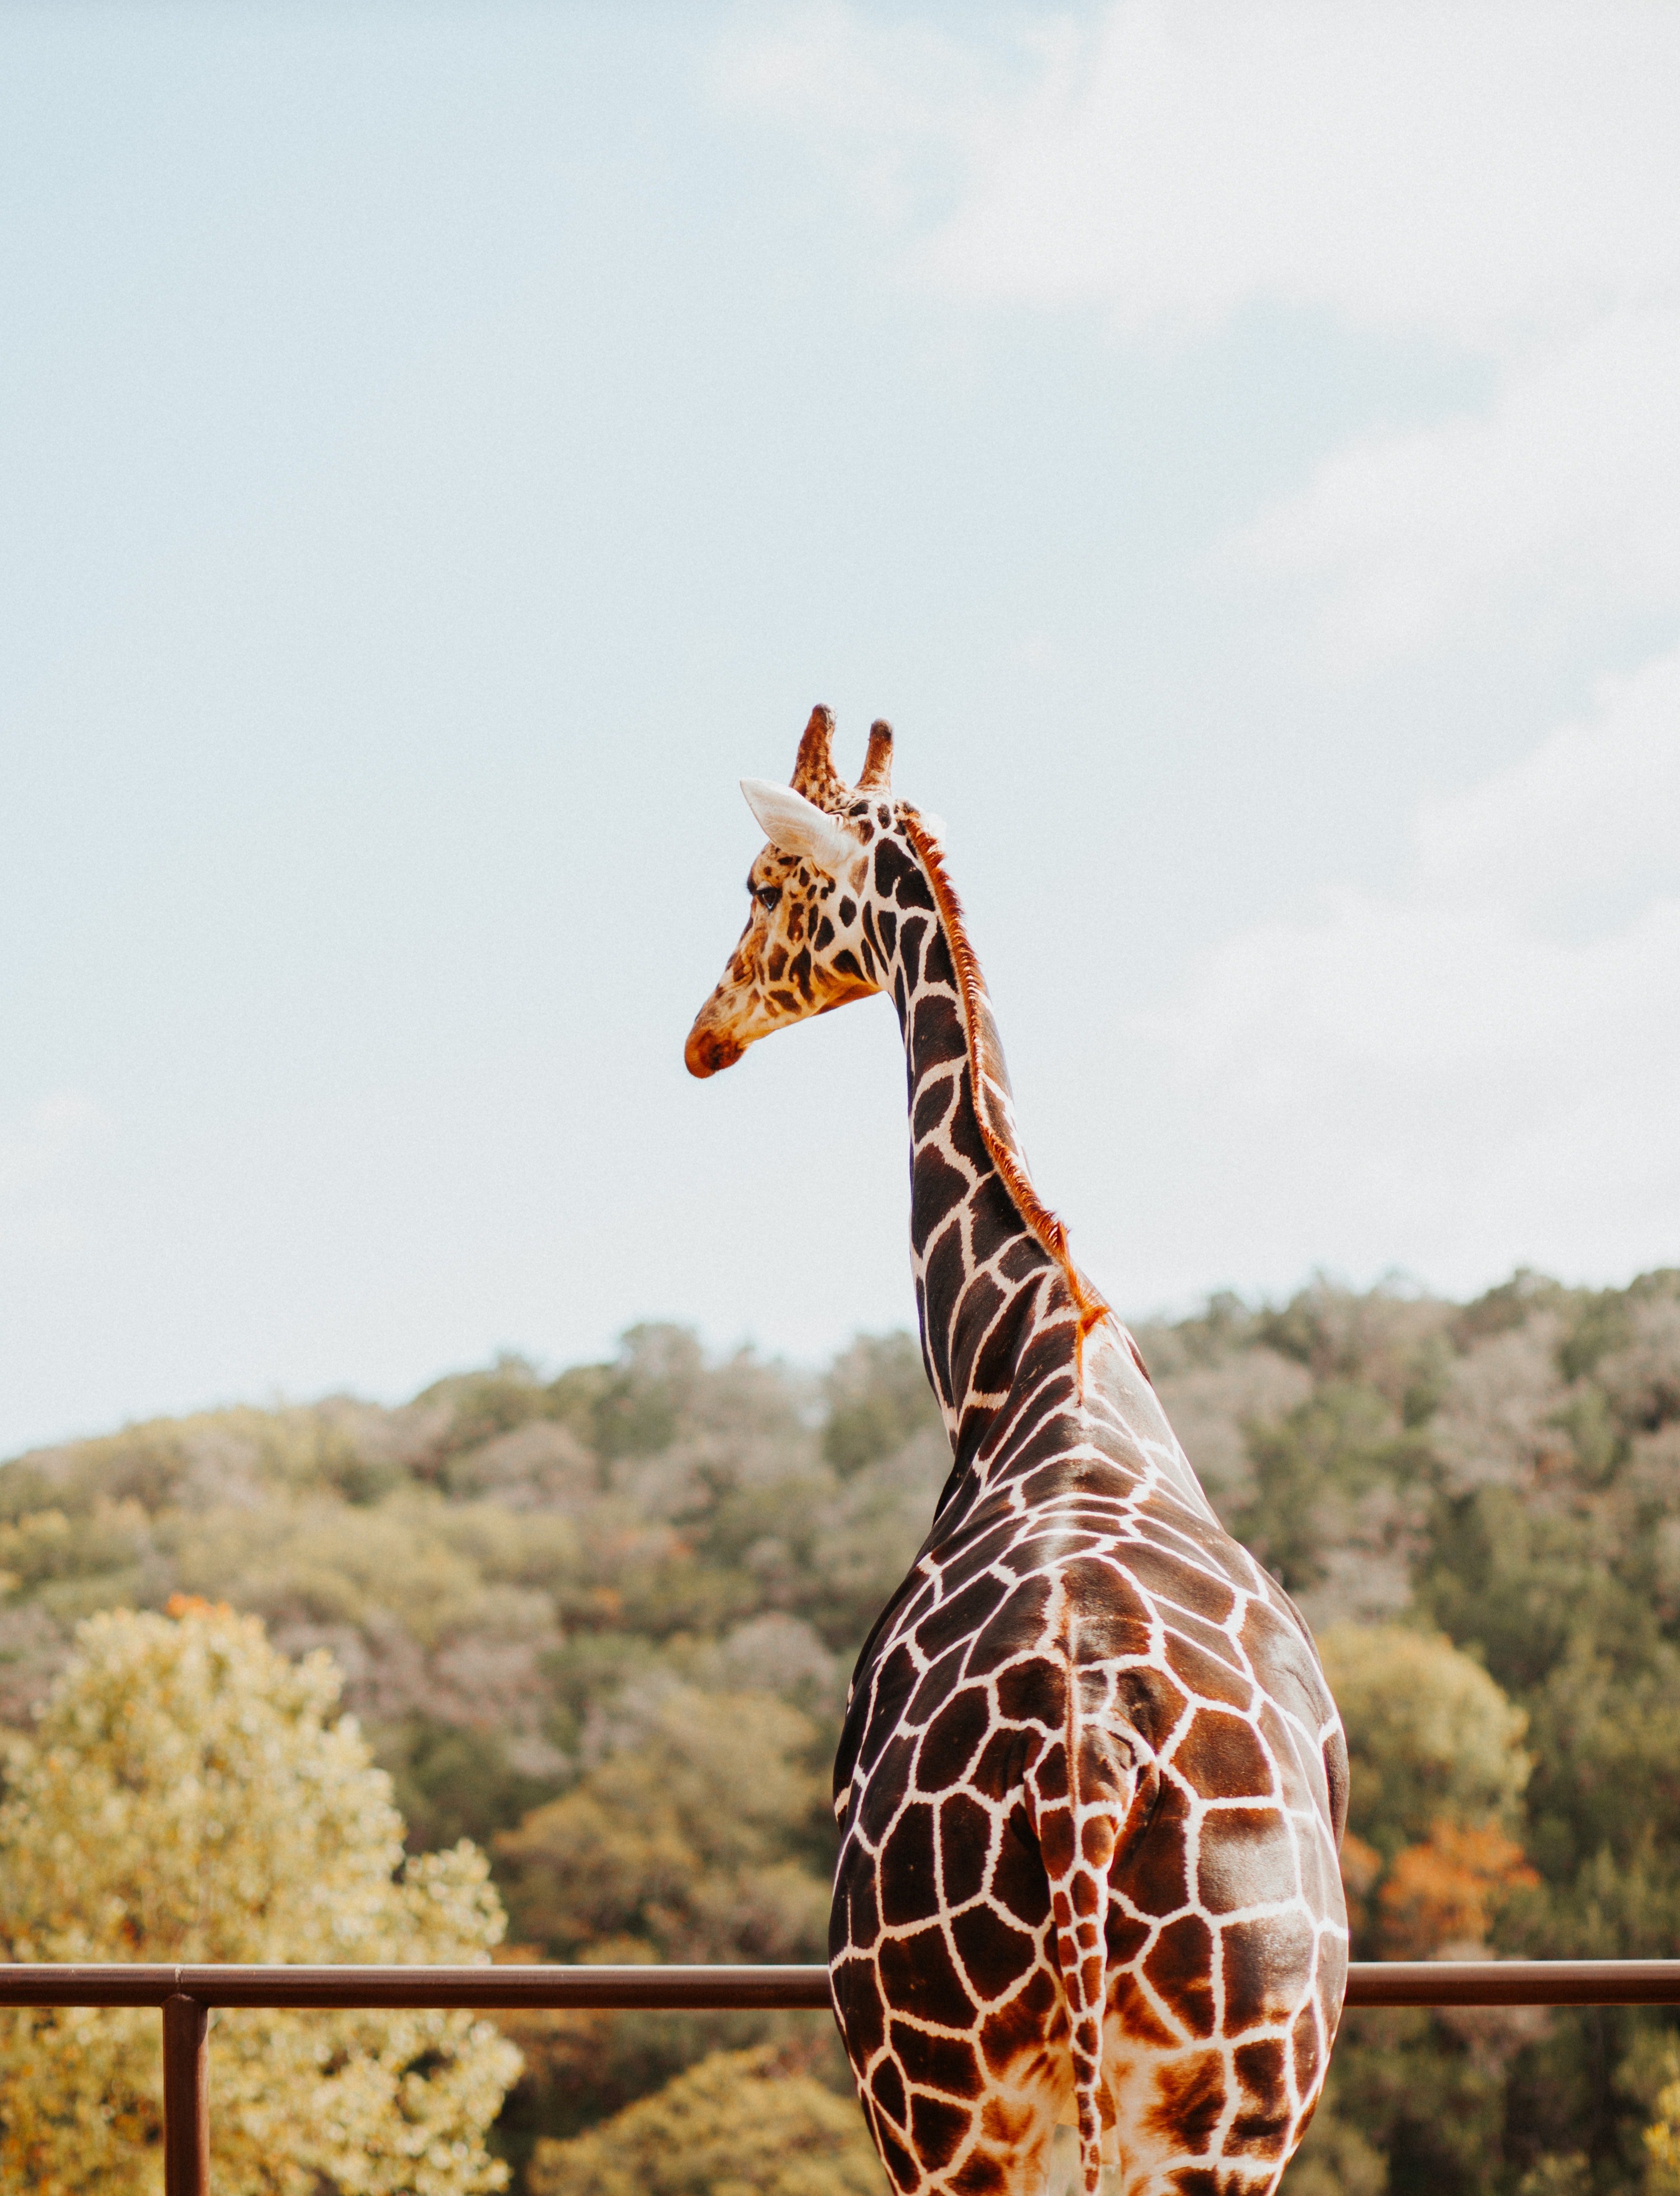 A giraffe standing by a pole. | Photo: Pexels